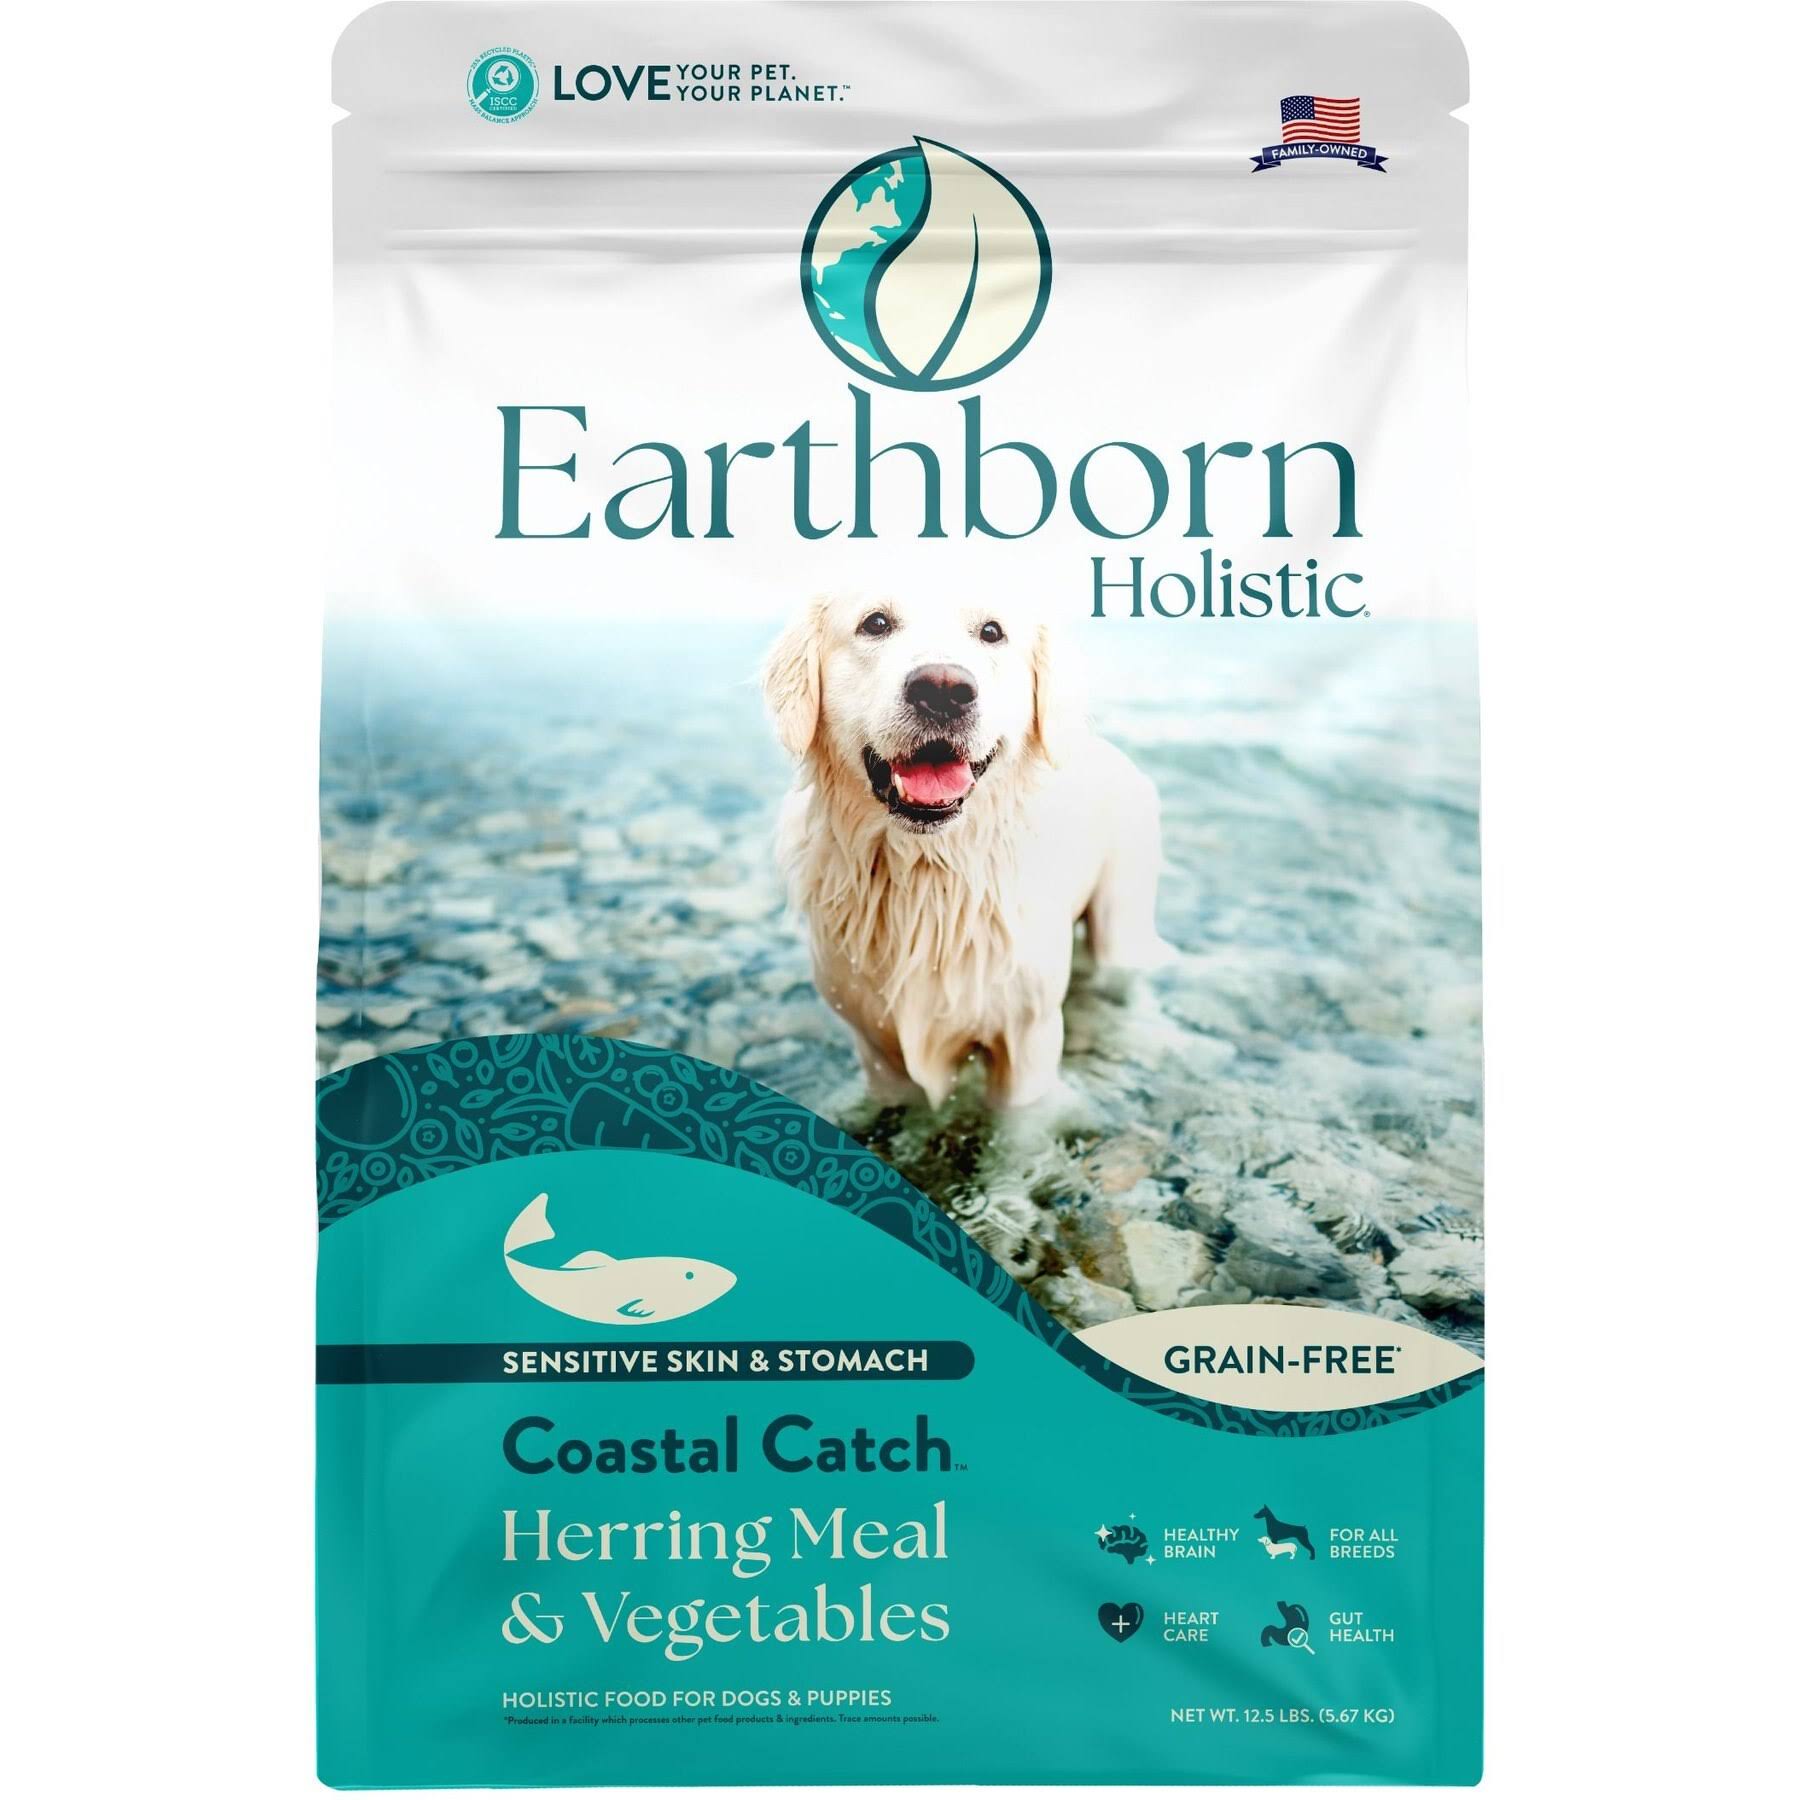 Earthborn Holistic Coastal Catch Herring Meal & Vegetables Grain-Free Dry Dog Food, 12.5-lb